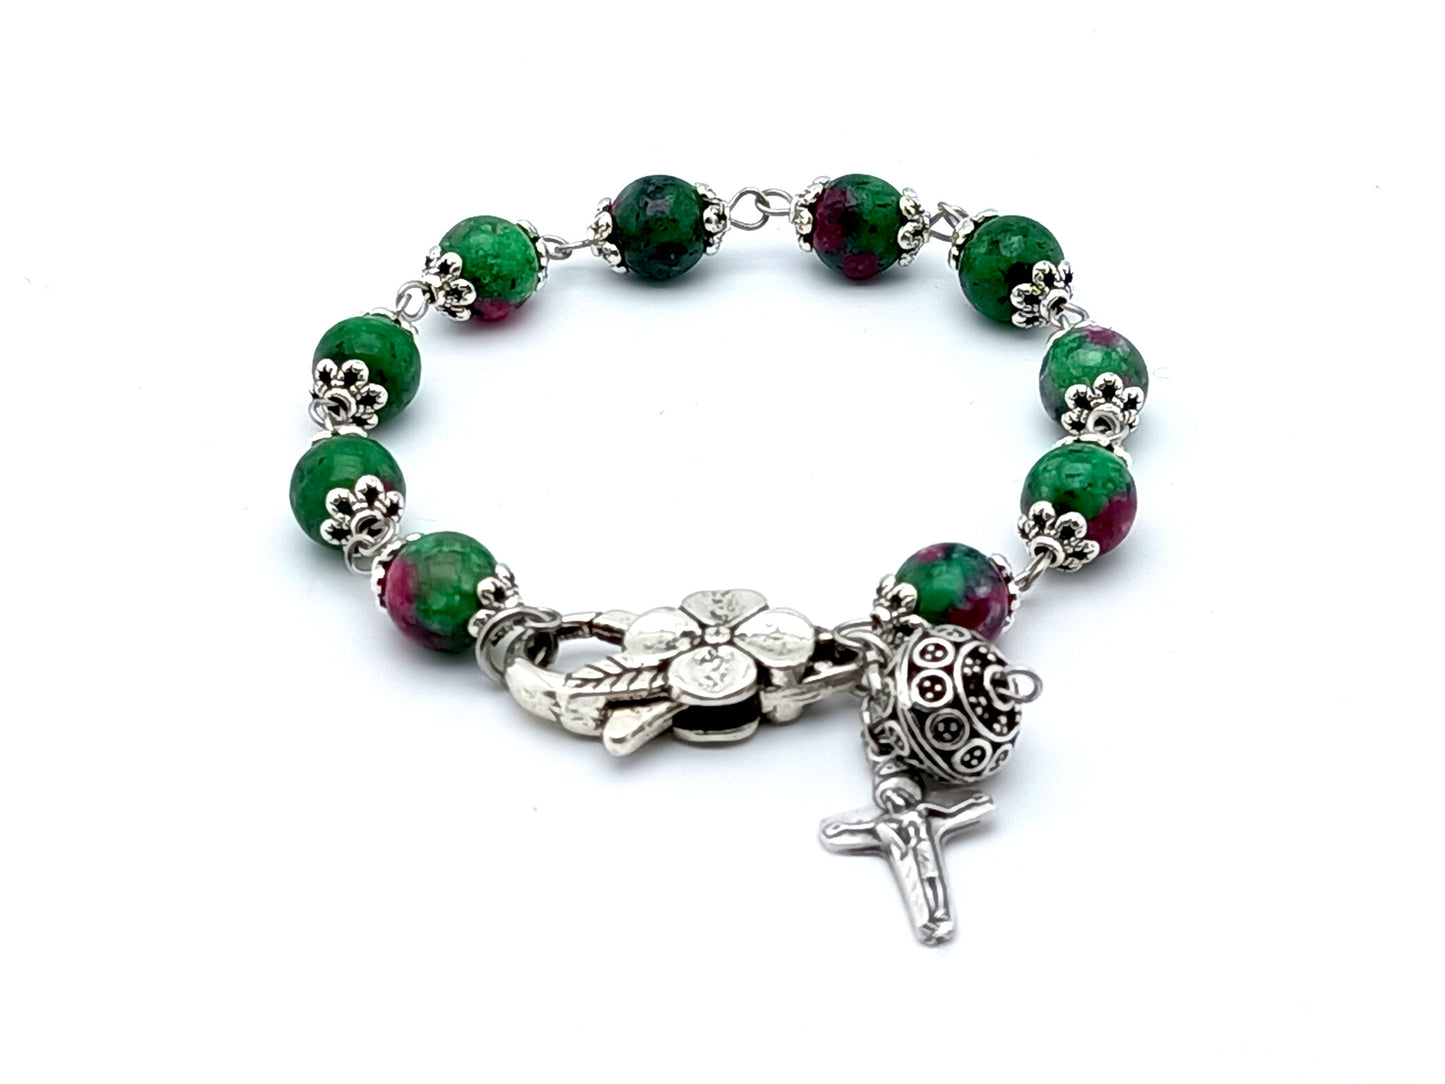 Saint Francis single decade rosary bracelet in Jasper and silver.